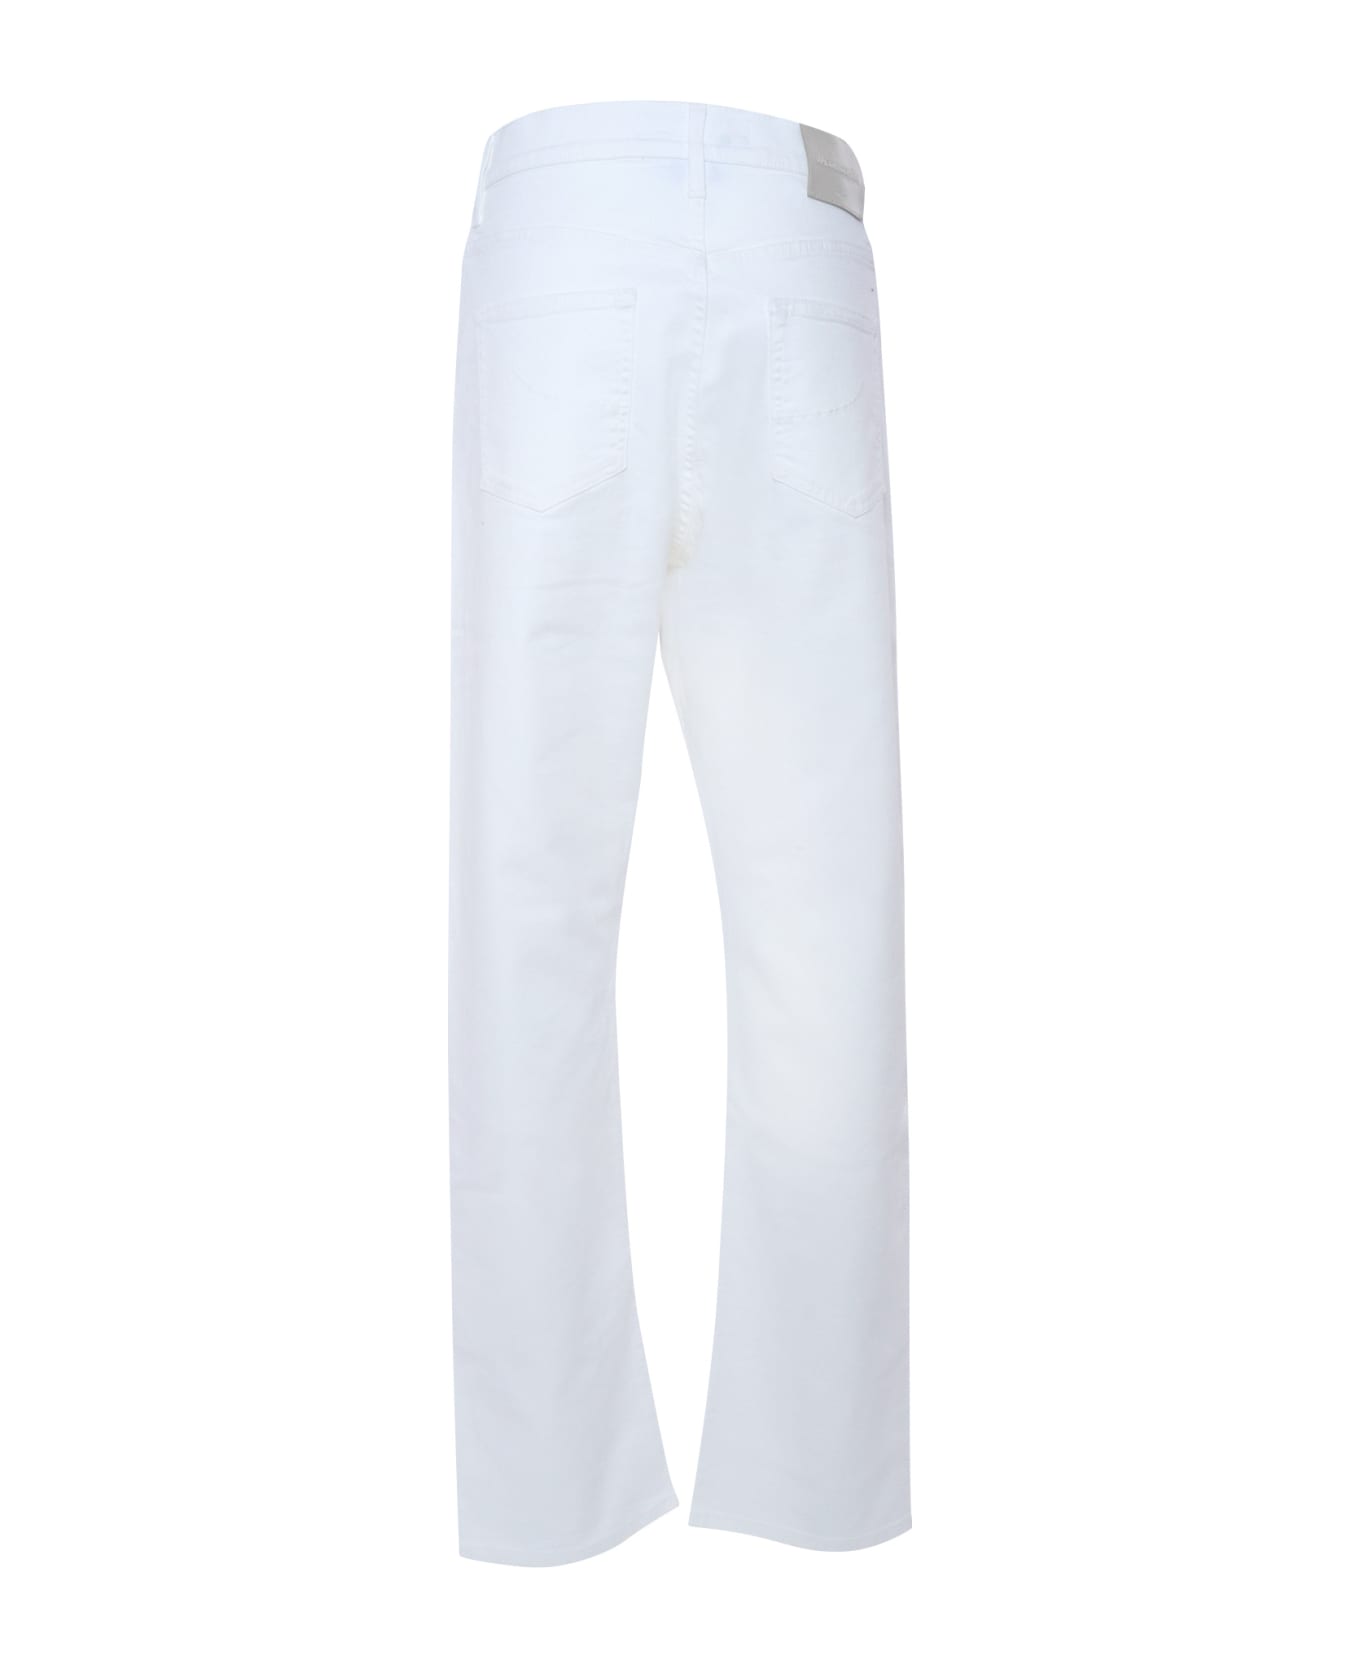 Jacob Cohen White 5 Pocket Jeans - WHITE